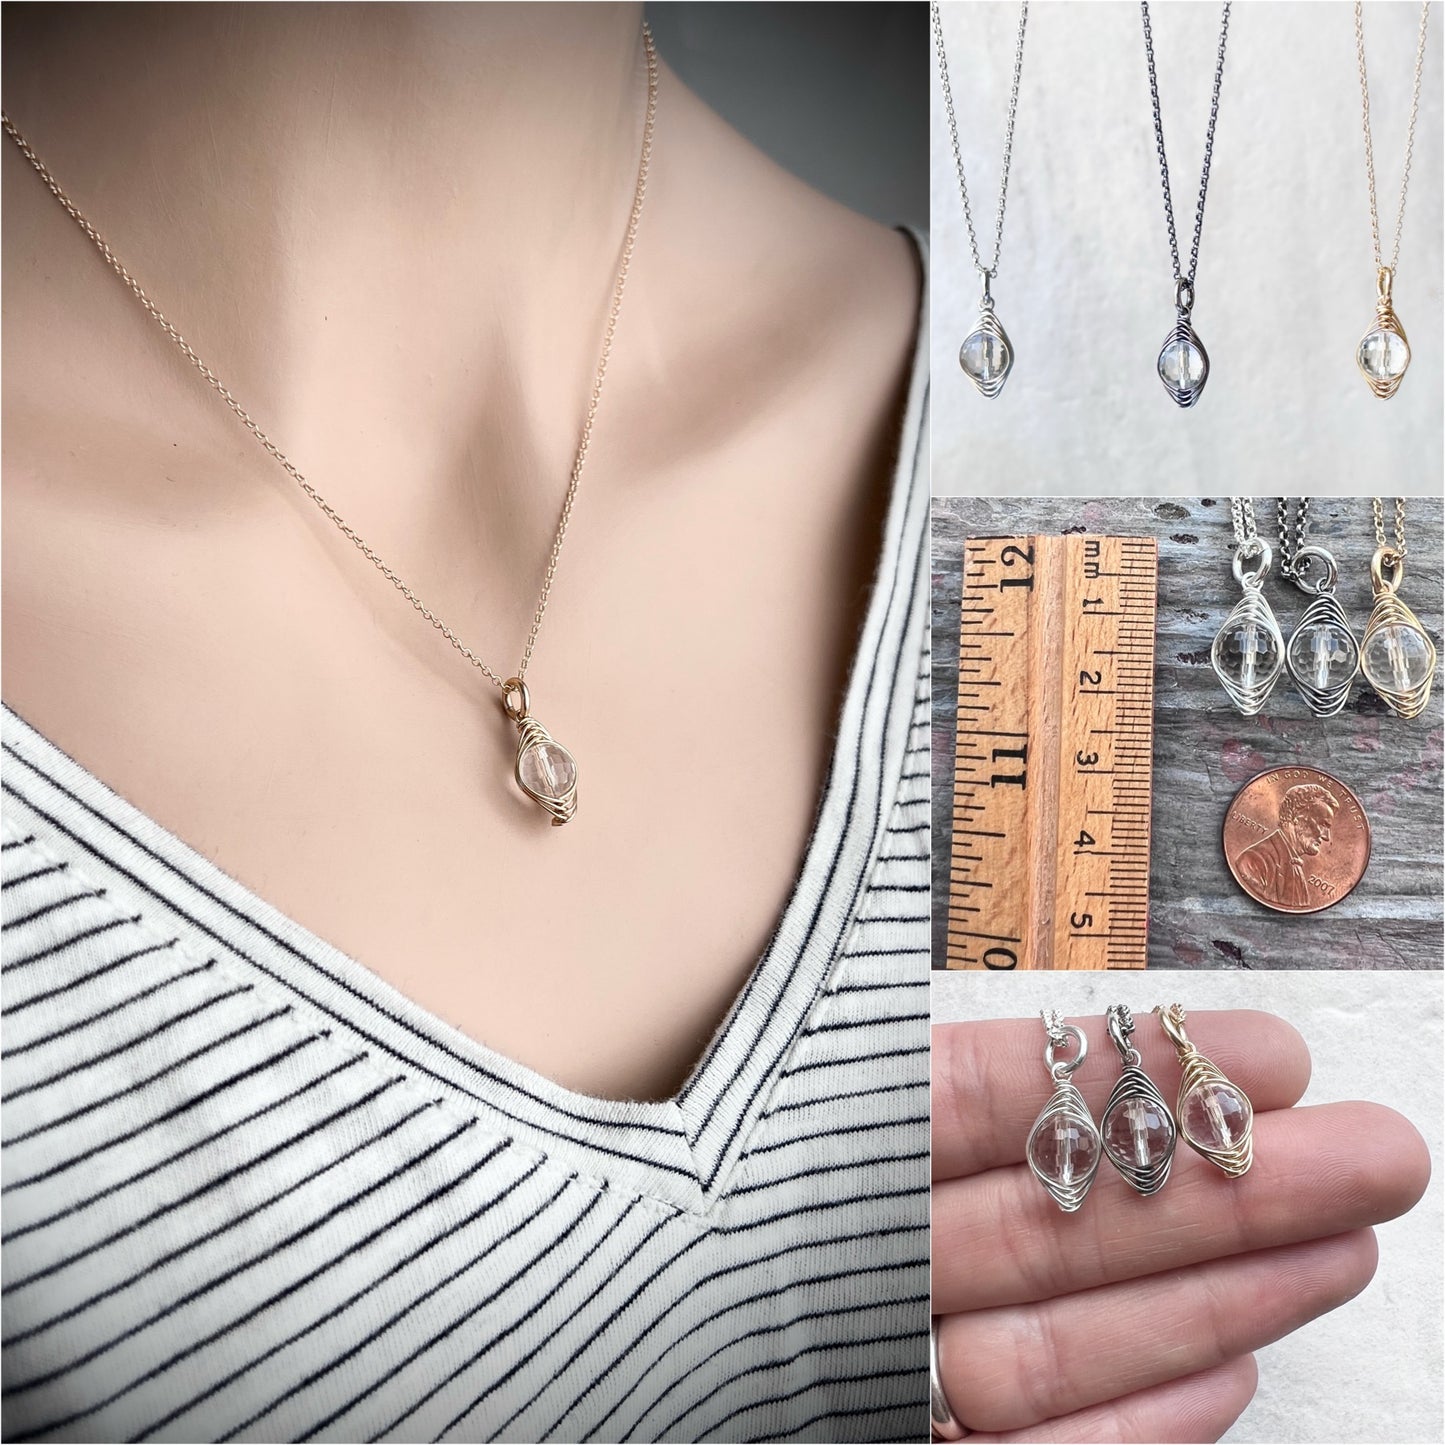 14k Goldfill Crystal Quartz Necklace | Natural Quartz Gold or Silver Pendant Dainty Necklace